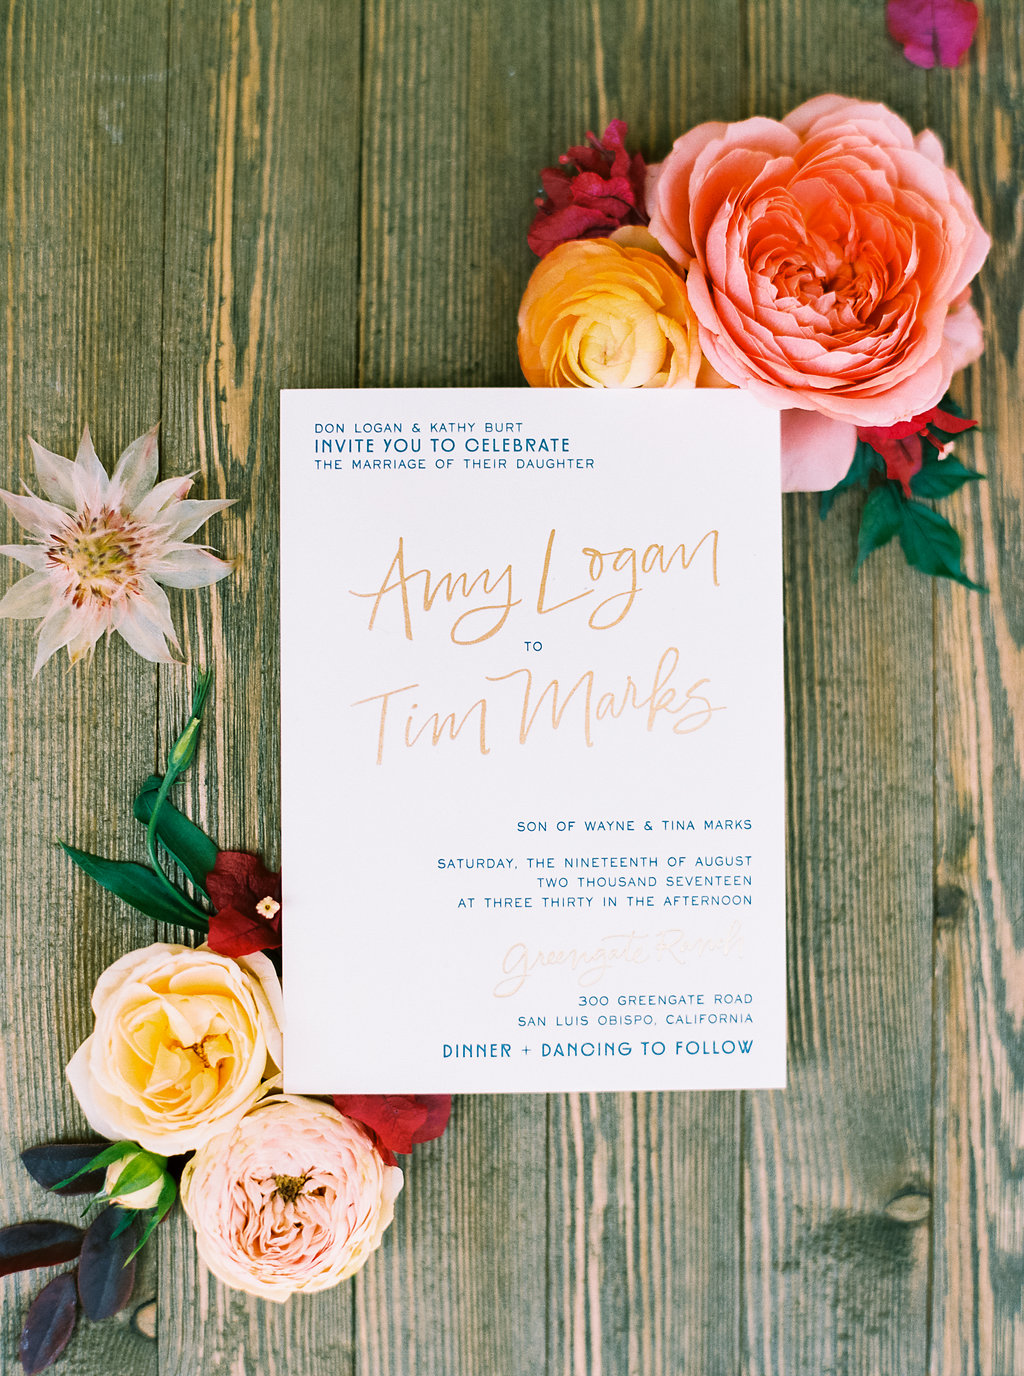 A Wedding Card of Amy Logan and Tim Marks | The Wedding Standard